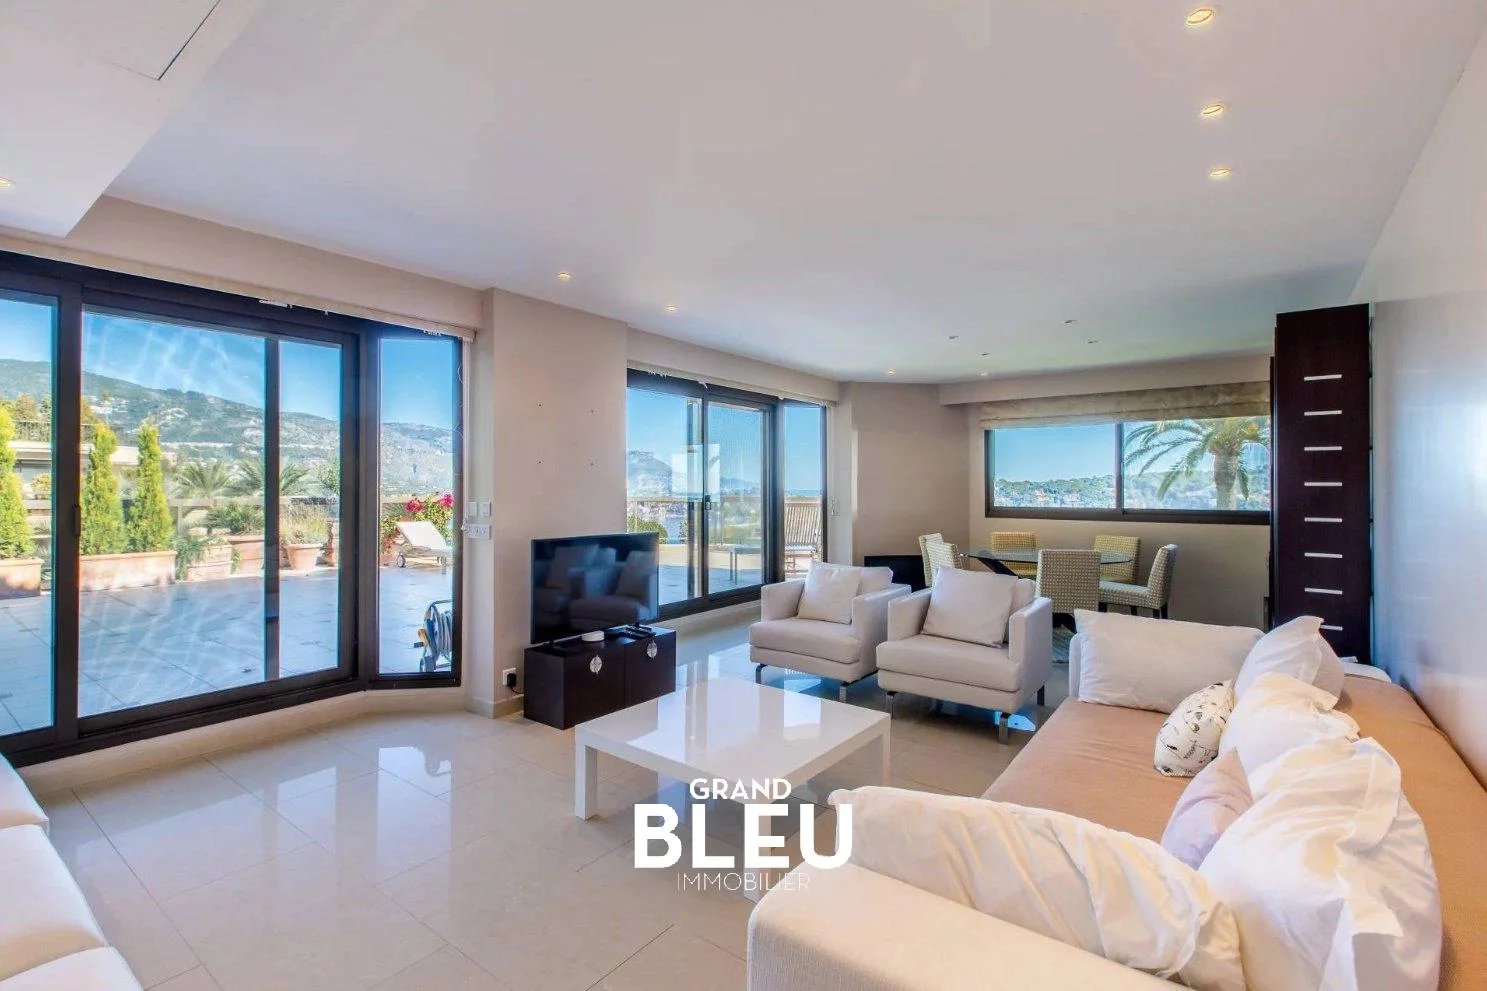 Cap de Nice : Appartement/Villa posé sur la mer, 200m² de terrasses